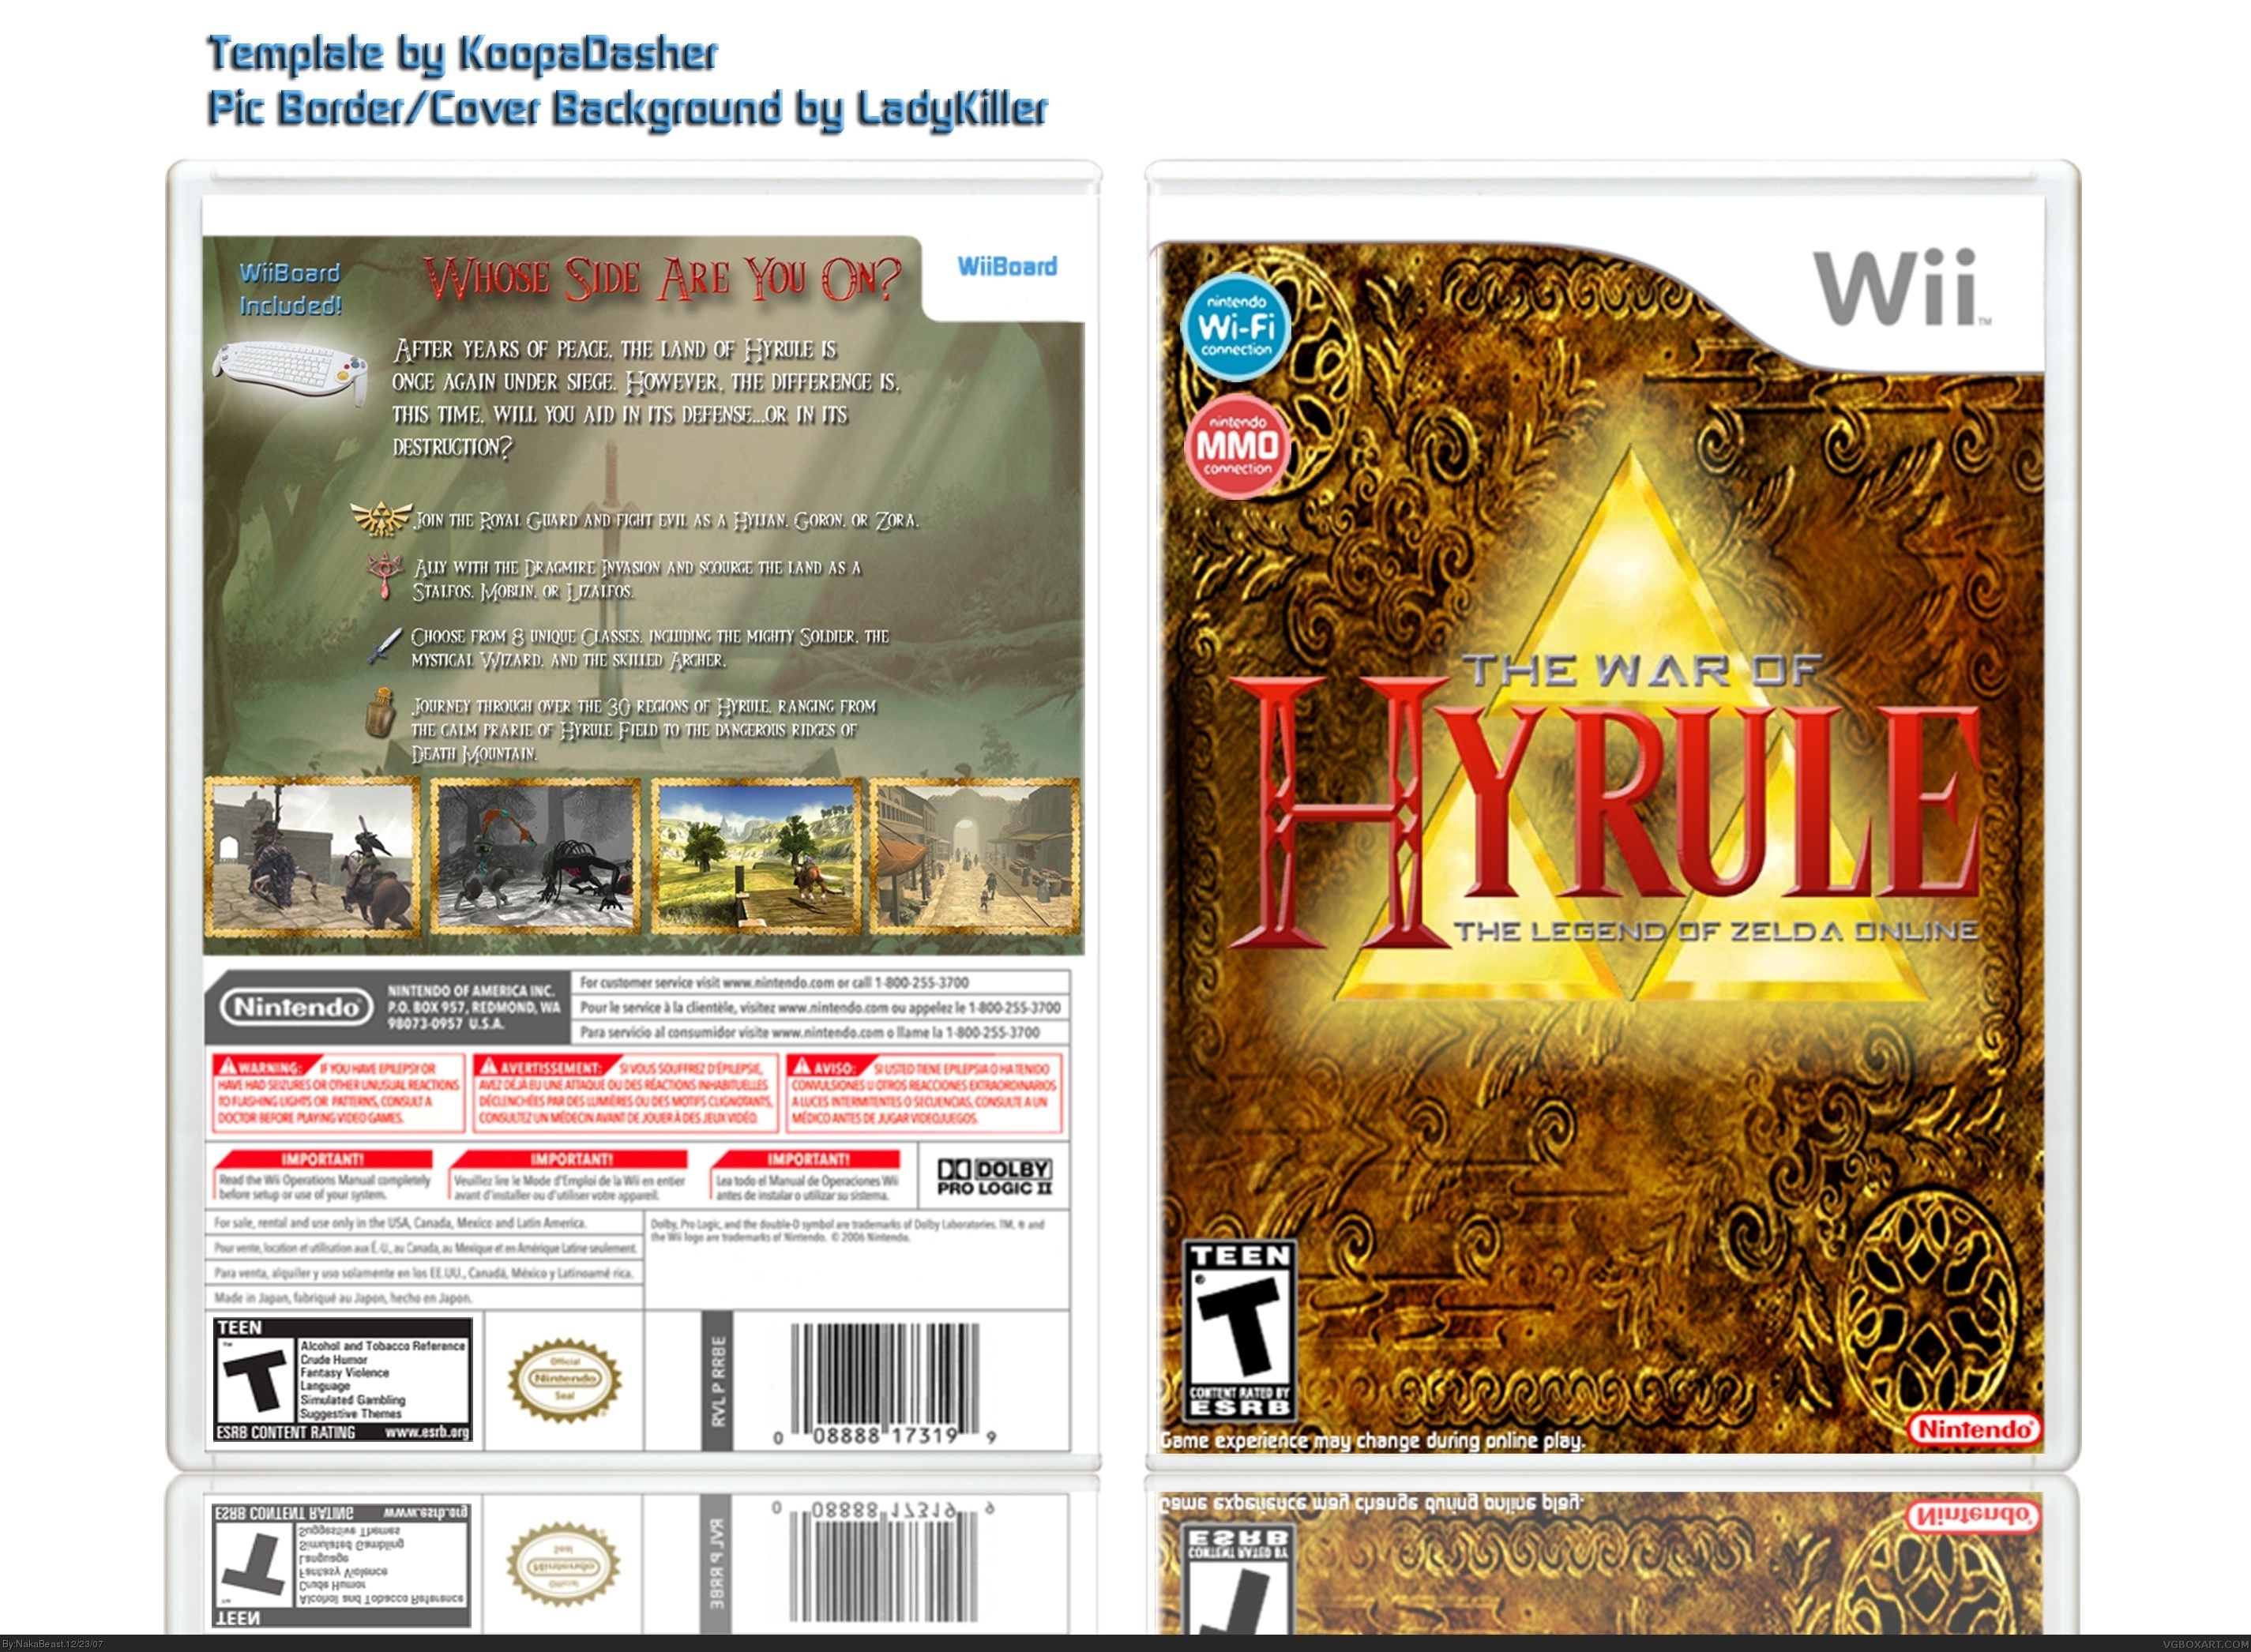 The War of Hyrule (The Legend of Zelda Online) box cover